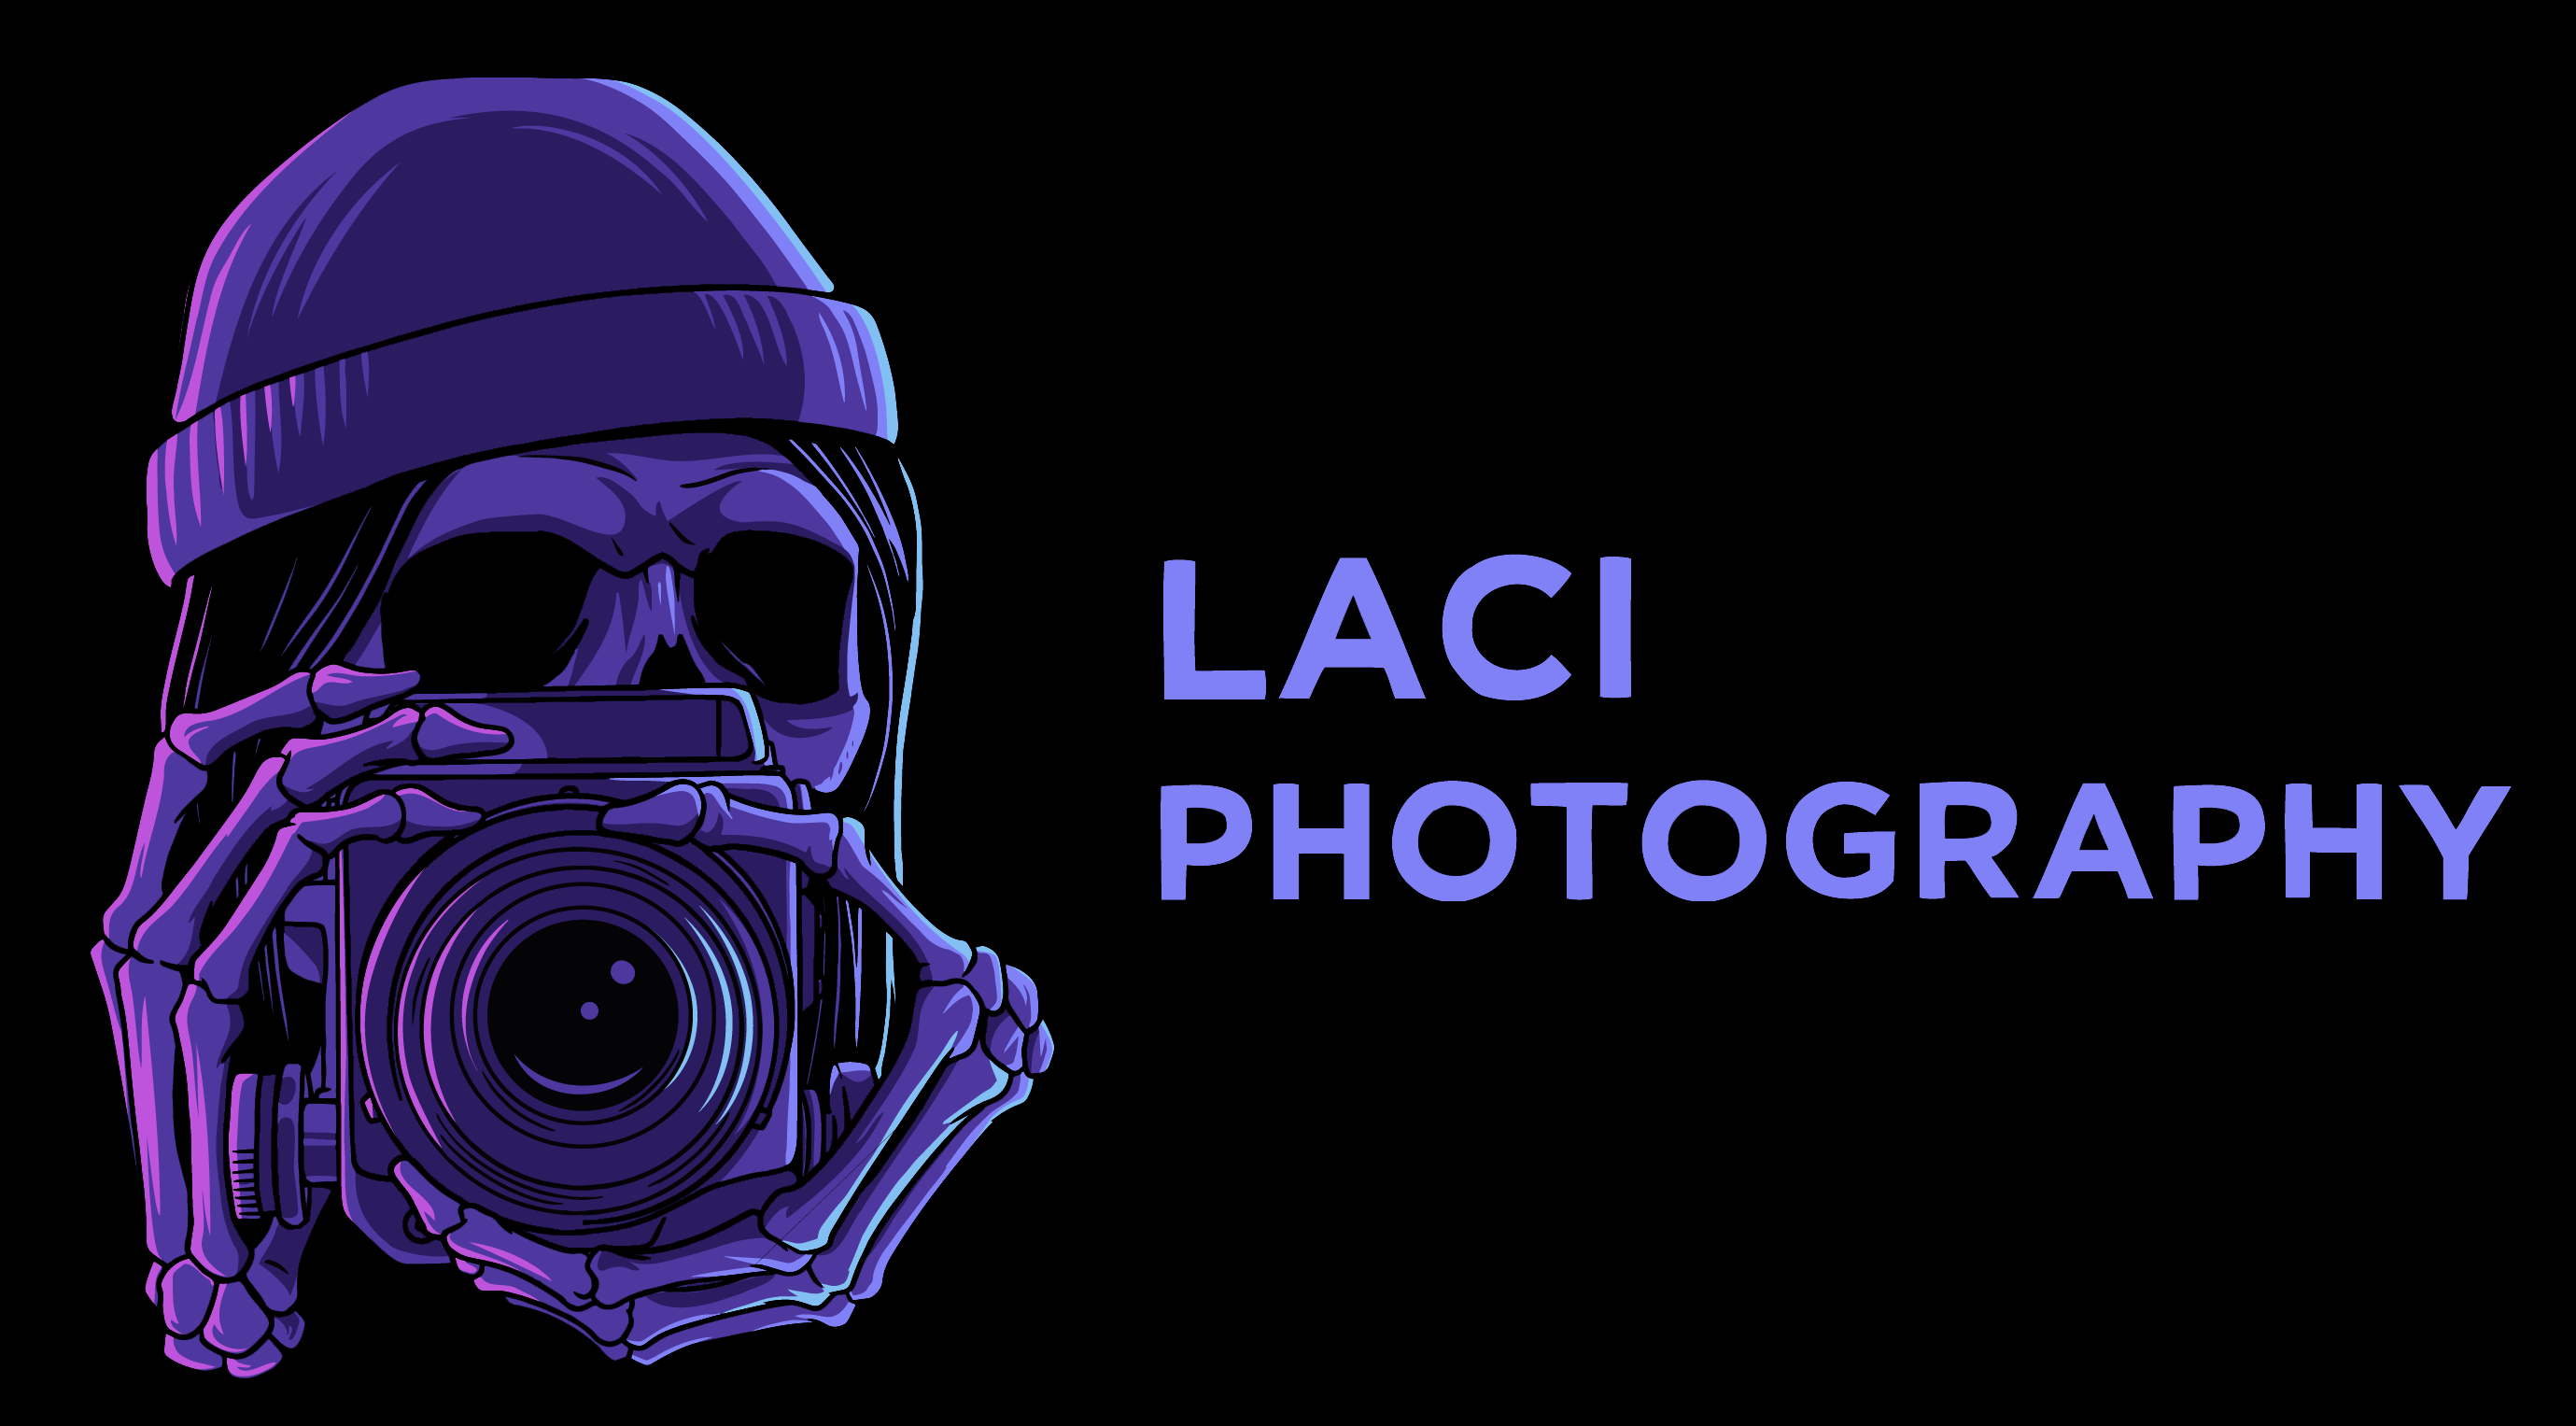 Laci Photography Design Logo cropped